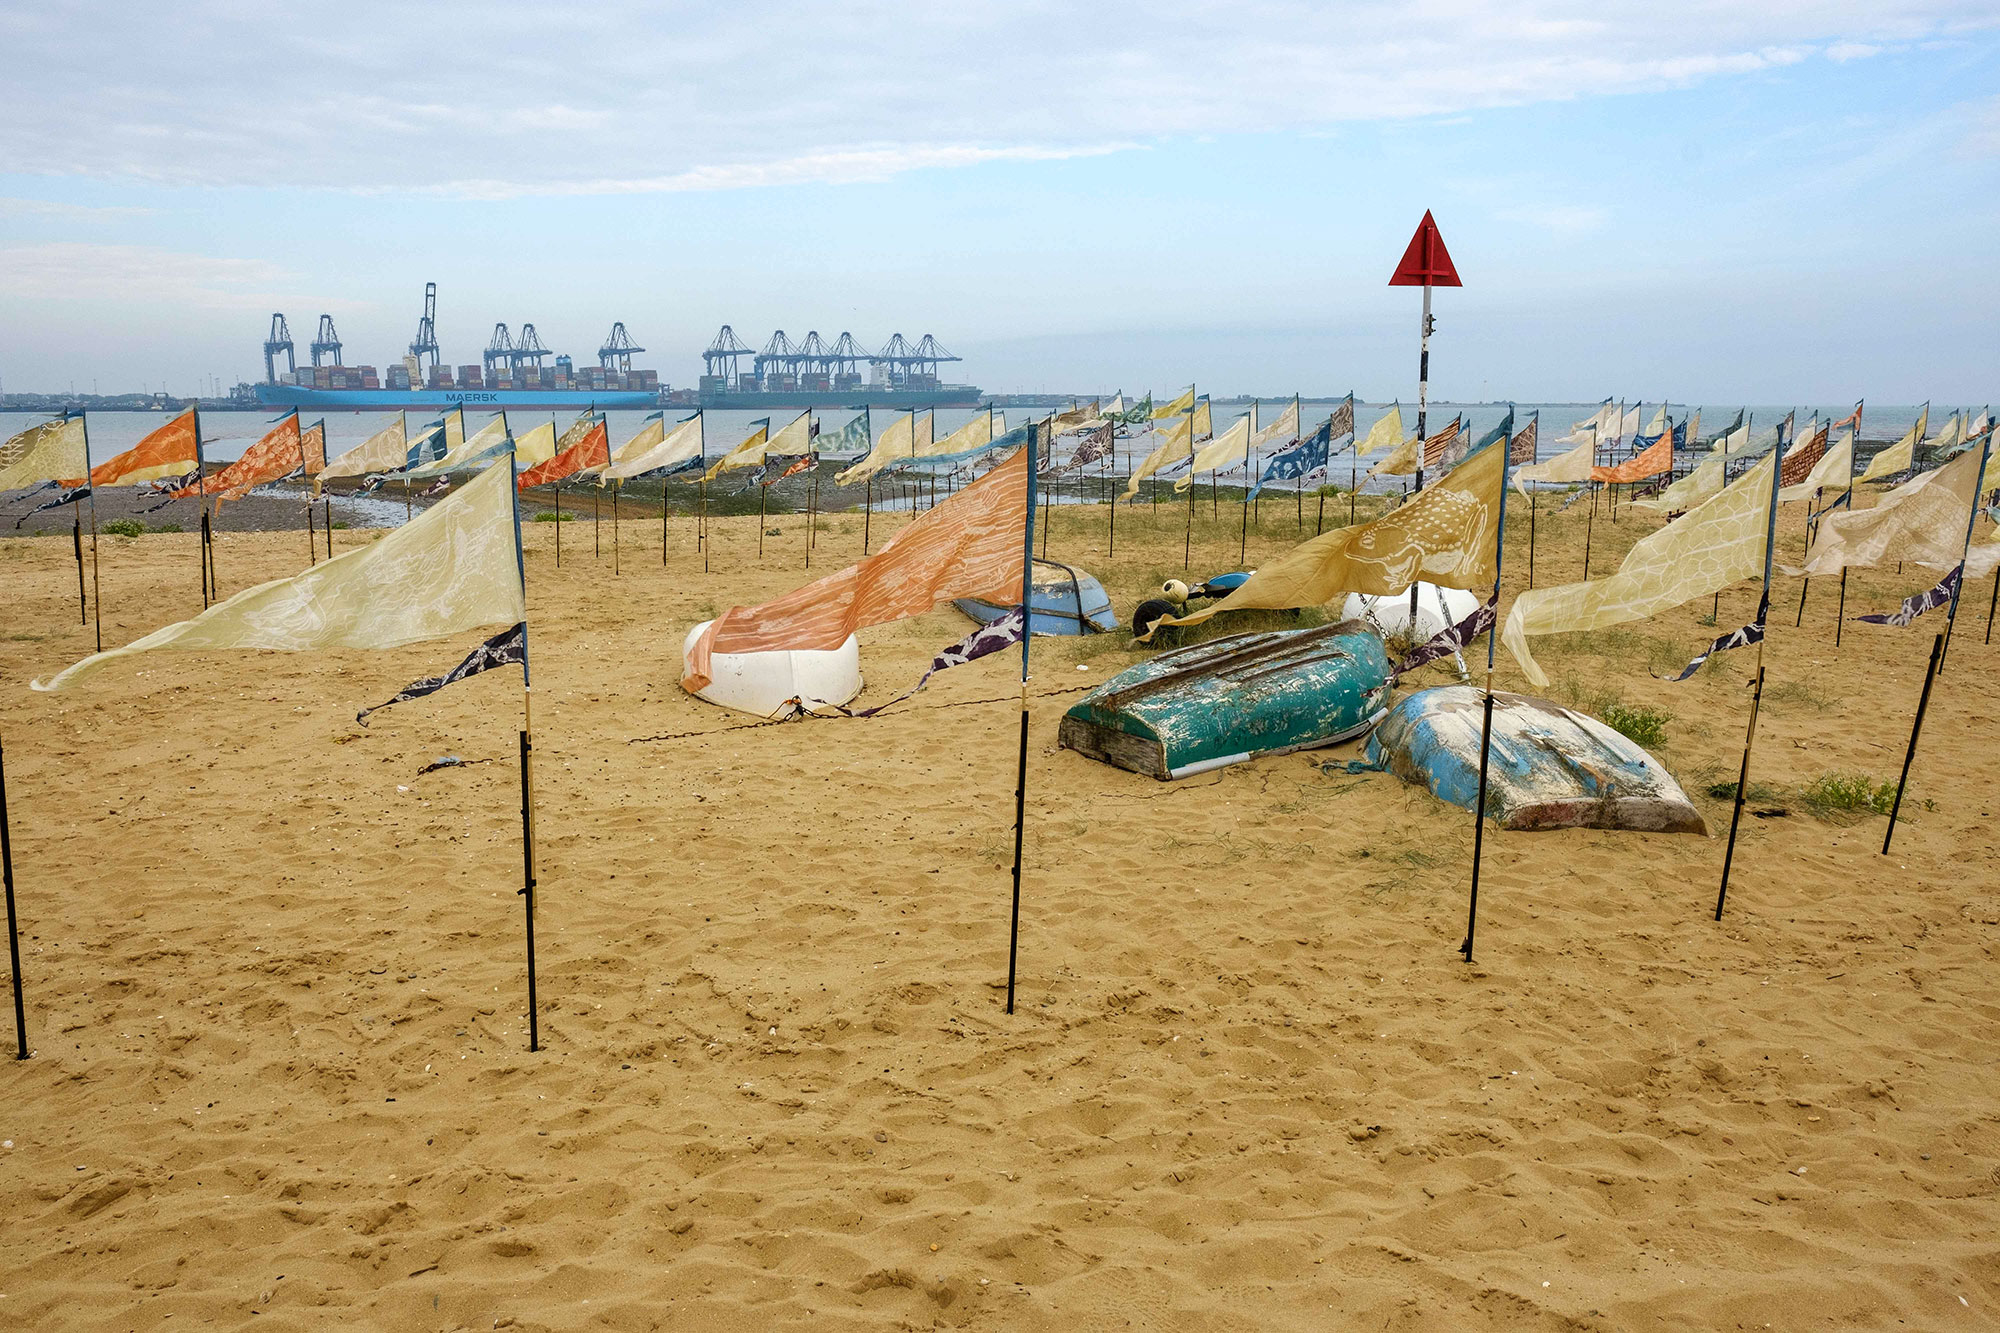 Beach of Dreams flags in Harwich